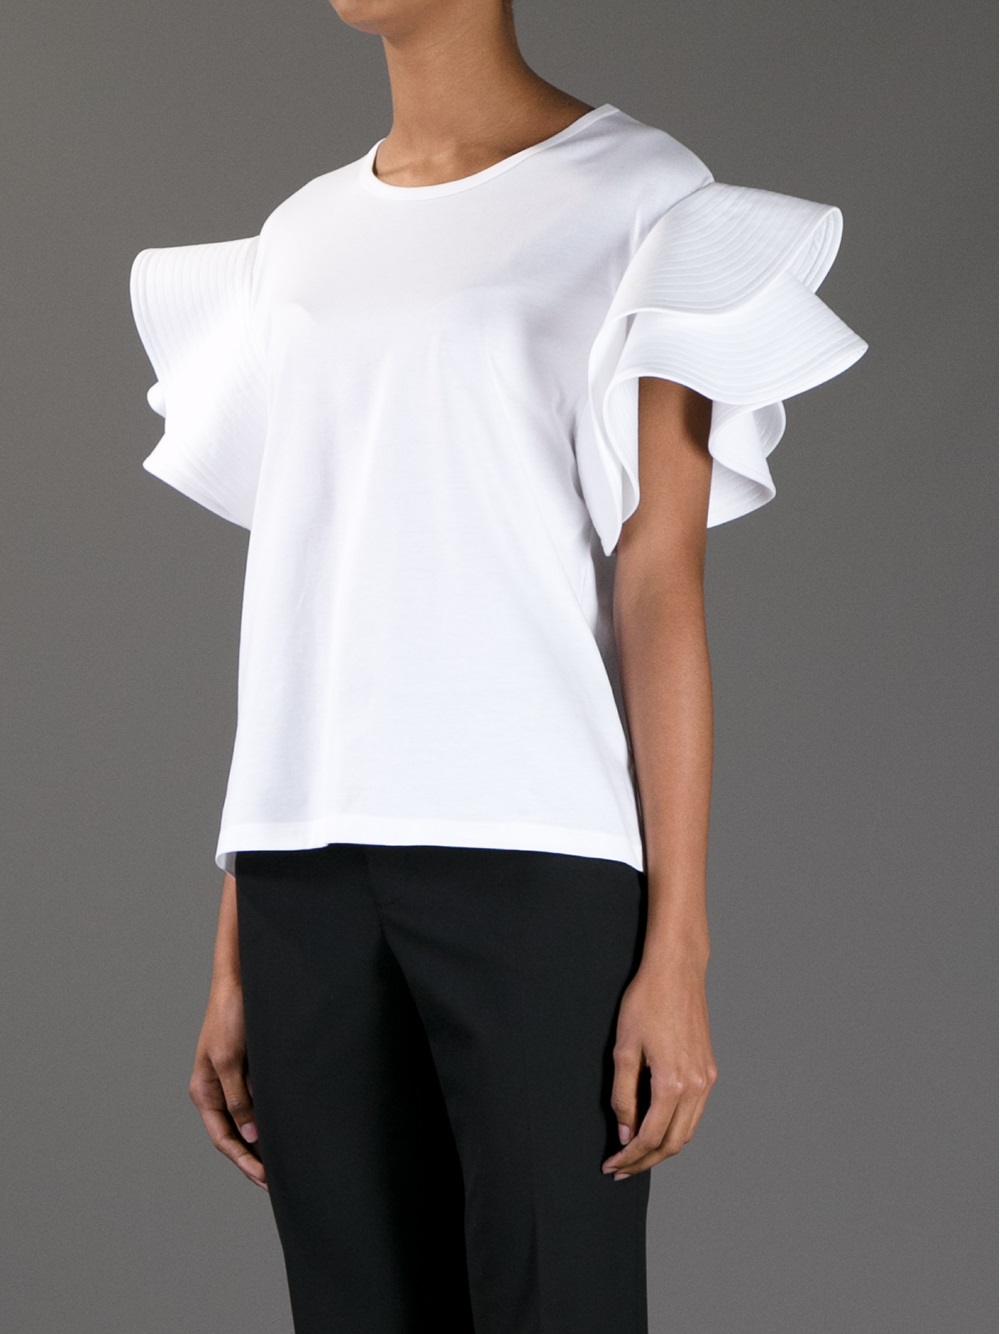 Chloé Ruffle Sleeve Top in White | Lyst